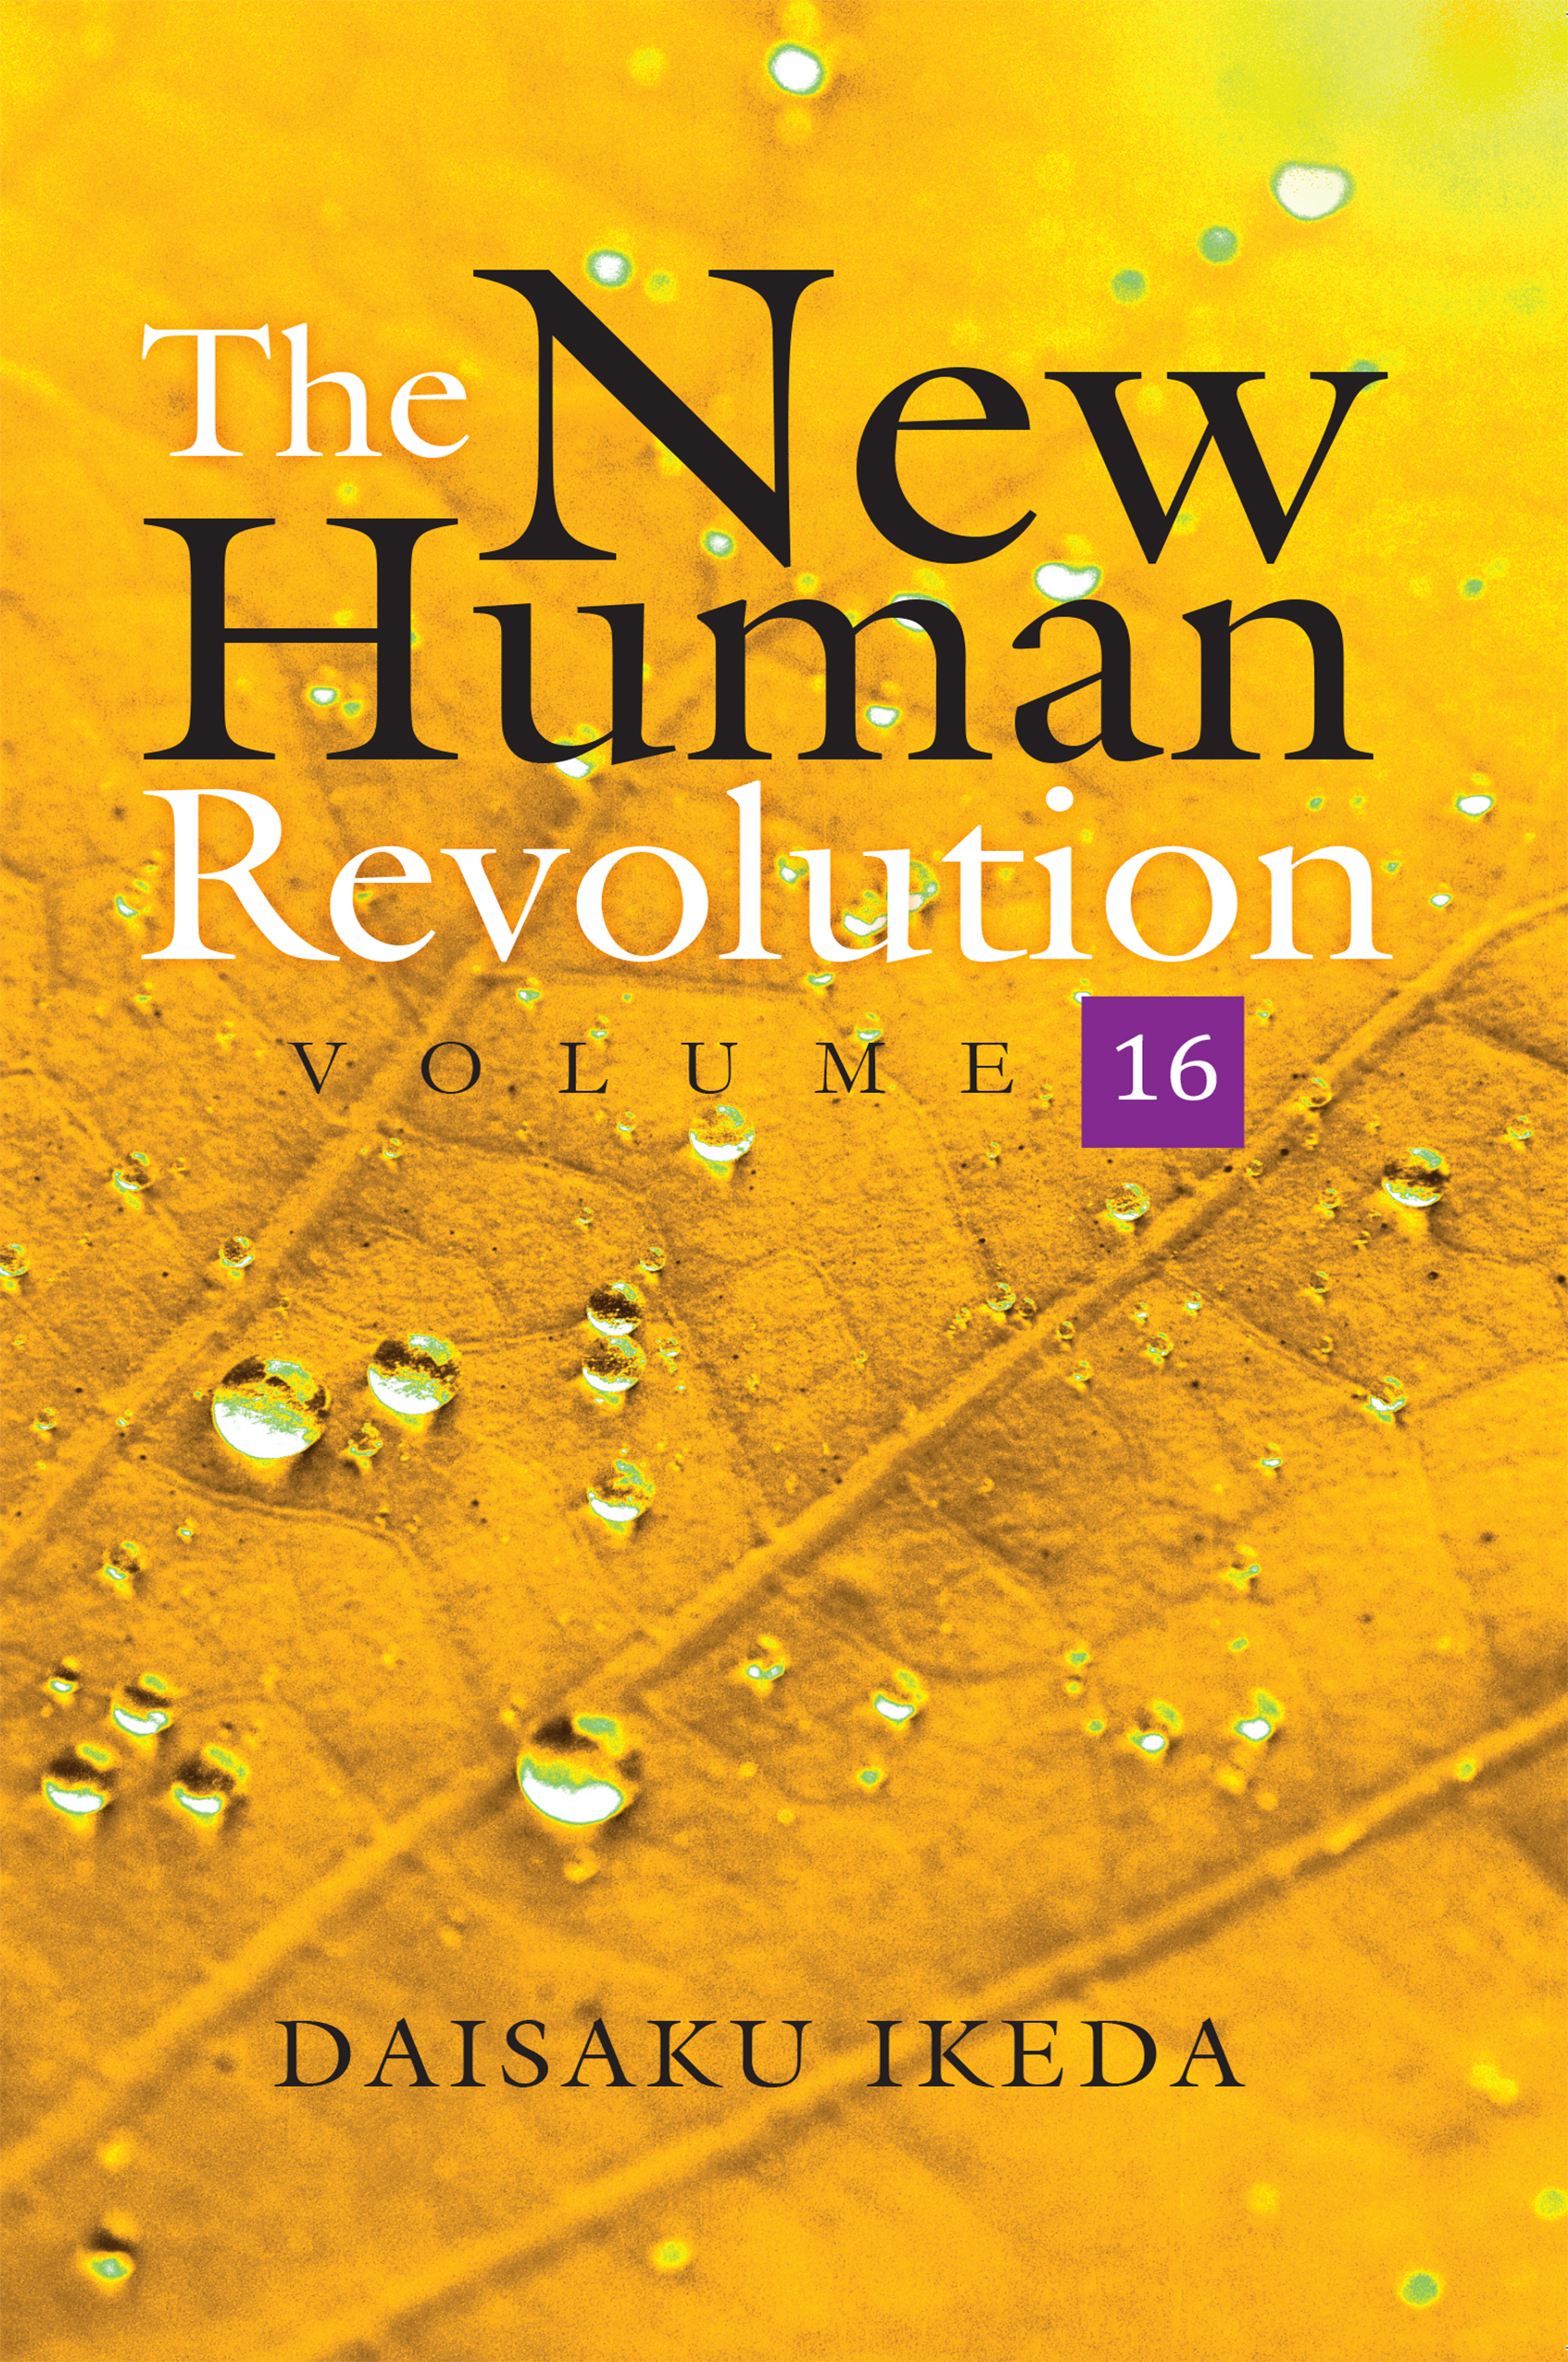 THE NEW HUMAN REVOLUTION VOL 16